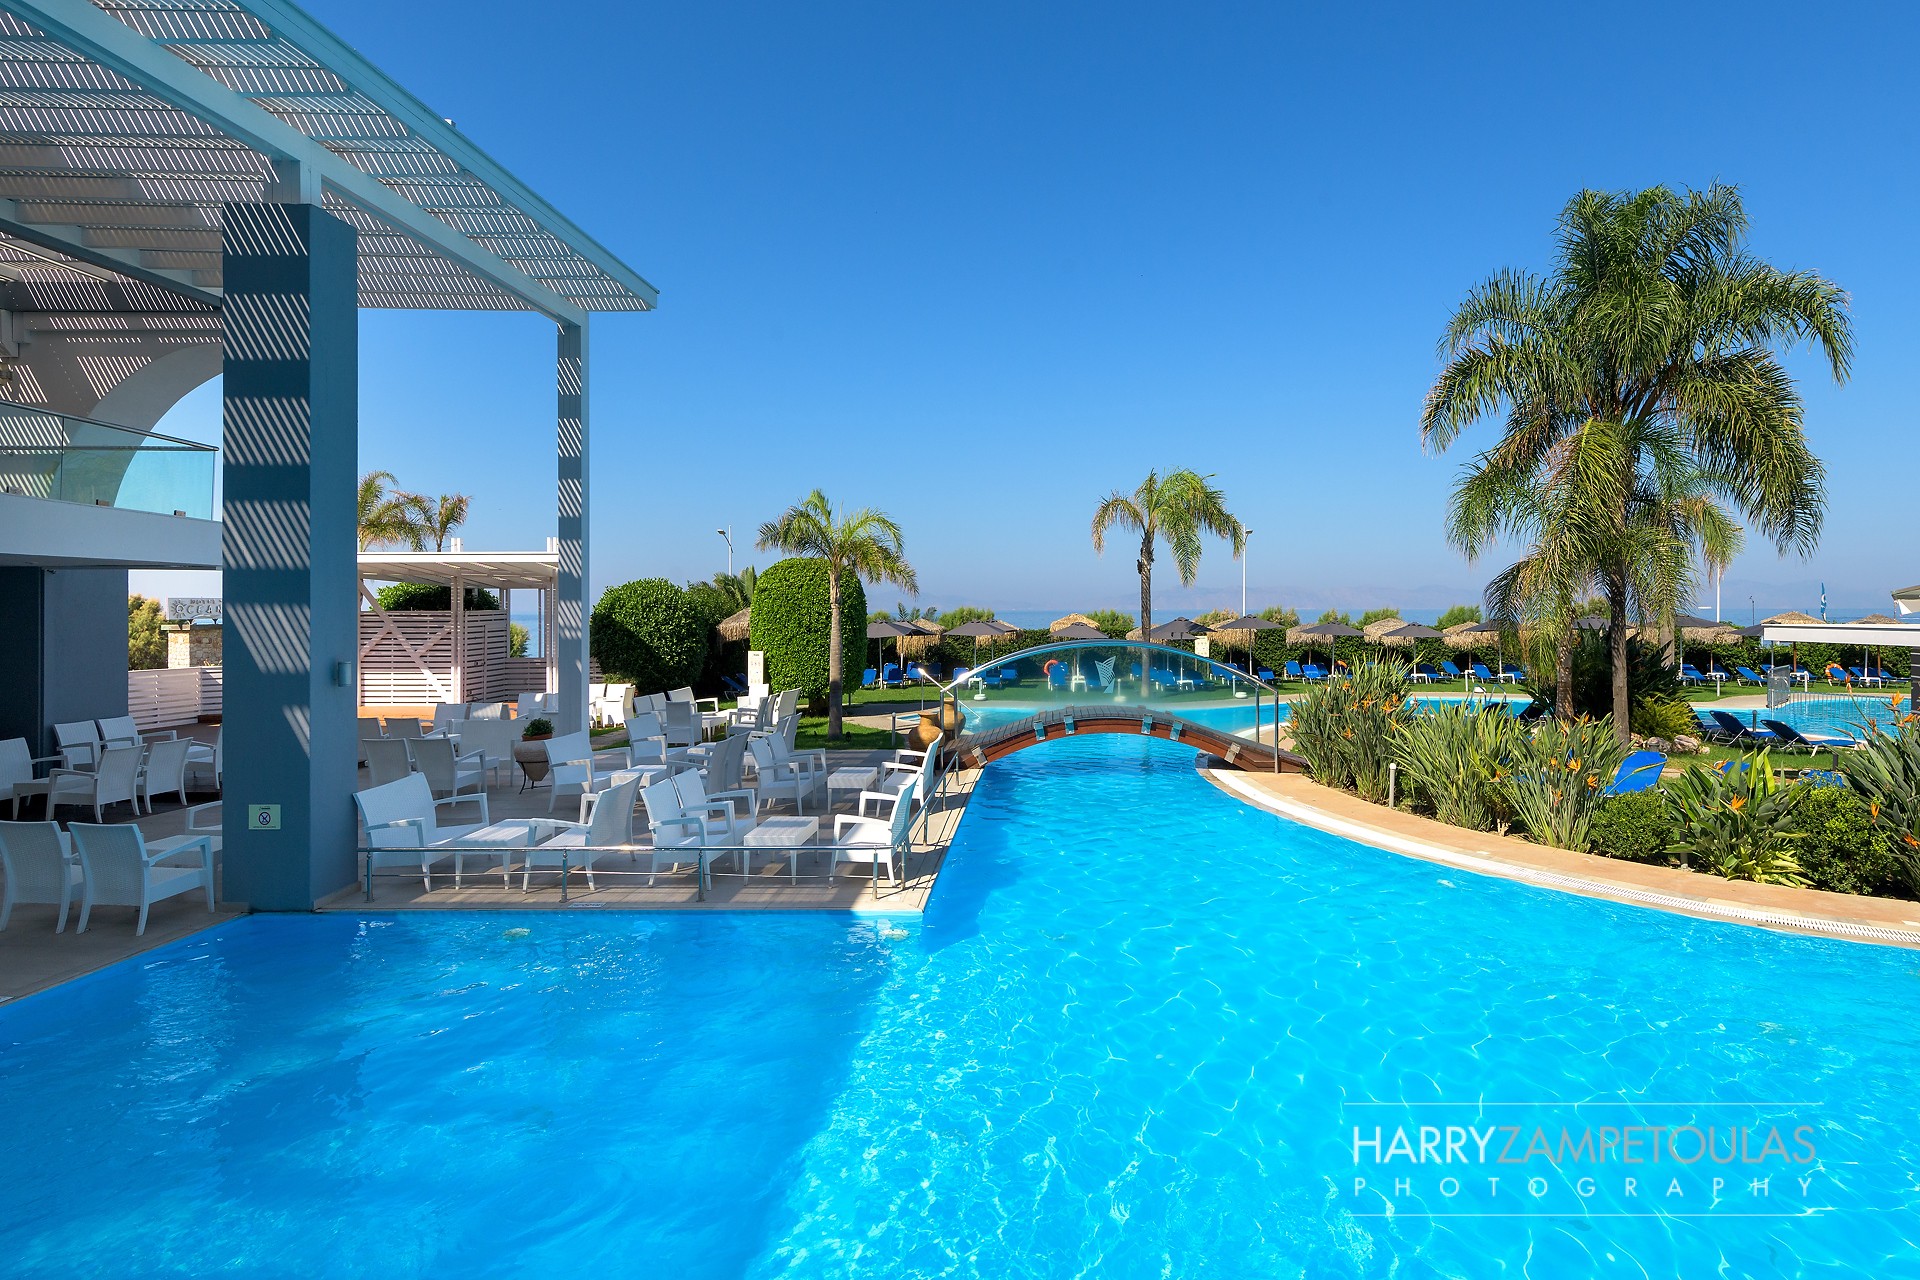 Oceanis-Hotel-Rhodes-Harry-Zampetoulas-Photography-20 Oceanis Hotel Rhodes - Hotel Photography 